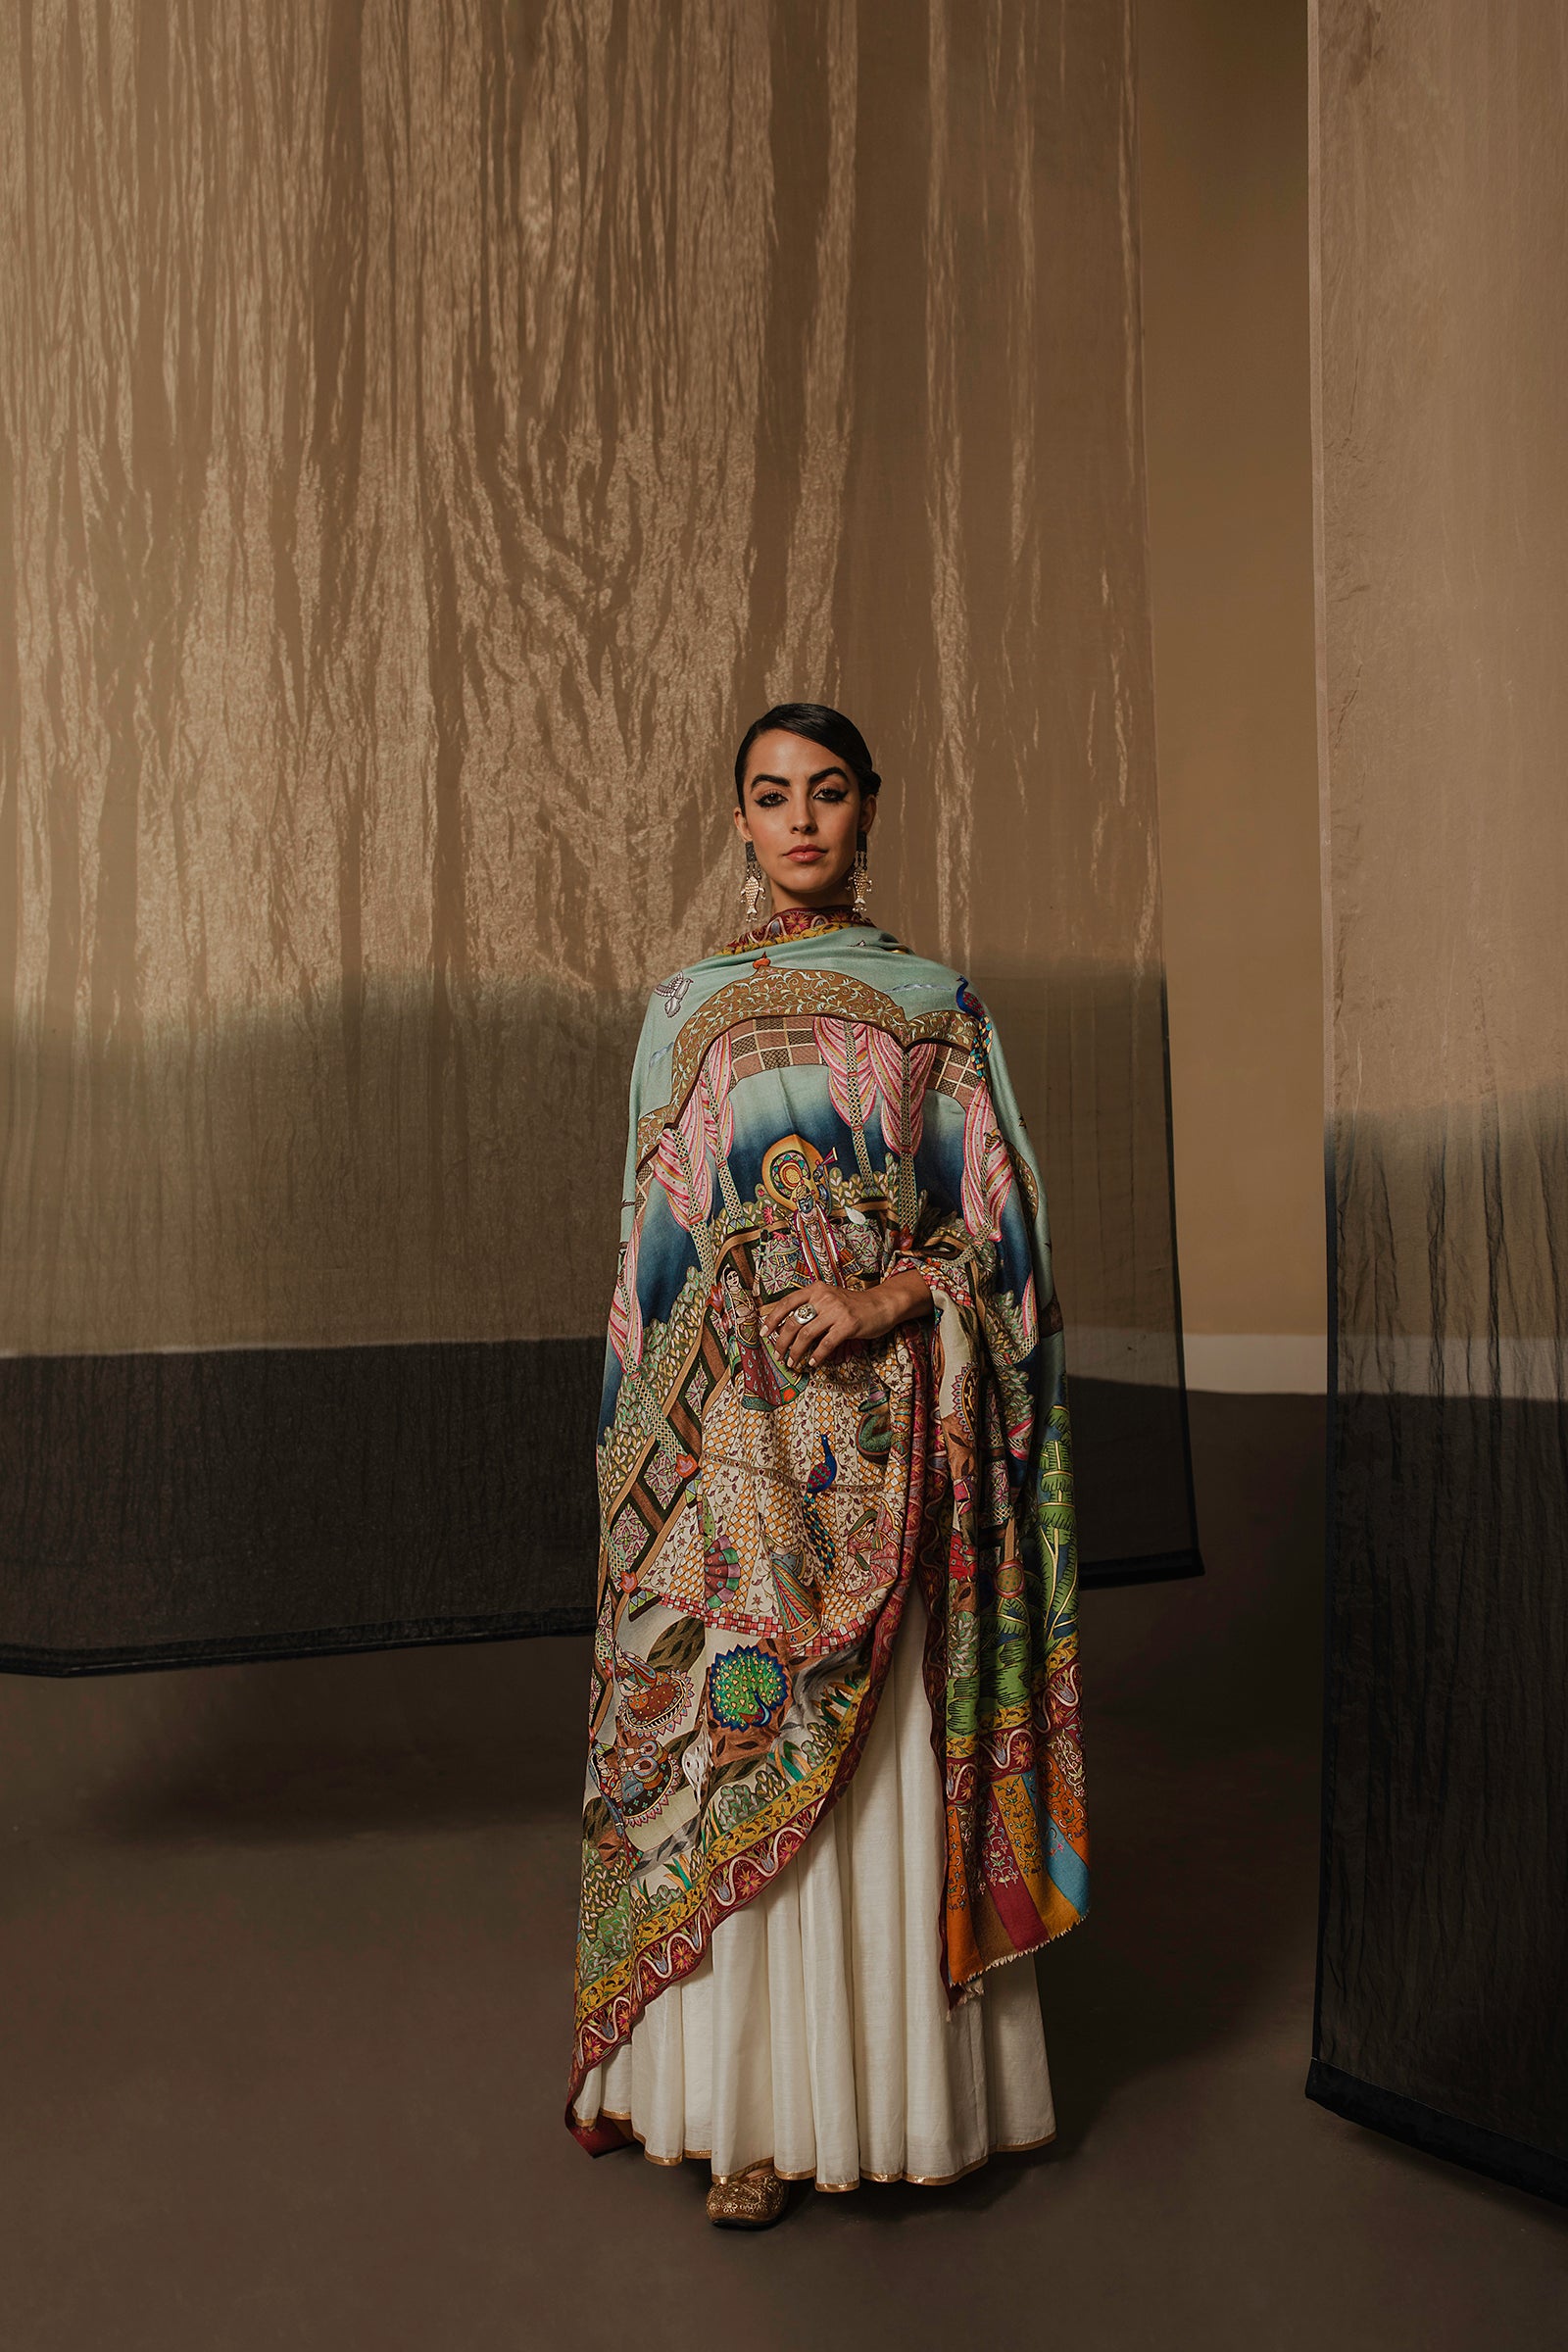 Model is wearing the Shree Nath ji Pashmina shawl from Shaza.